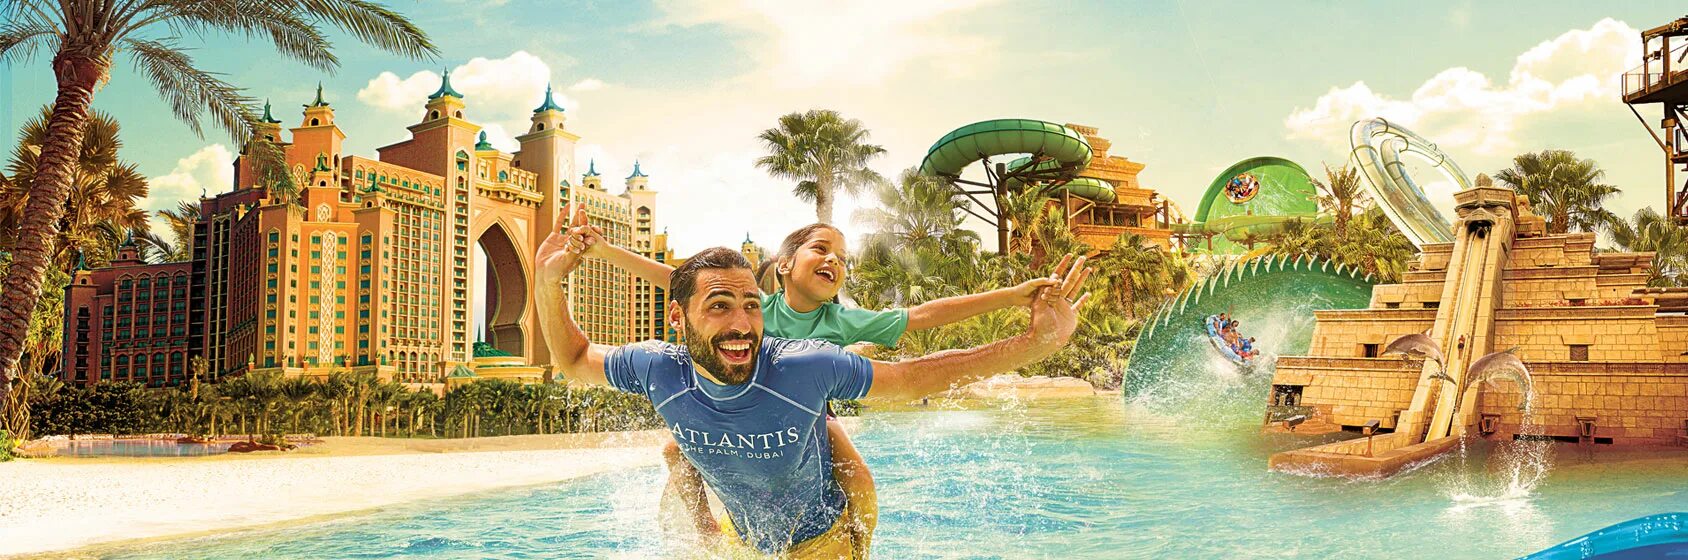 Atlantis цены. Аквапарк Атлантис Дубай. Аквапарк Аквавентура Дубай. Atlantis the Palm Dubai аквапарк. Atlantis the Palm Dubai 5 аквапарк.